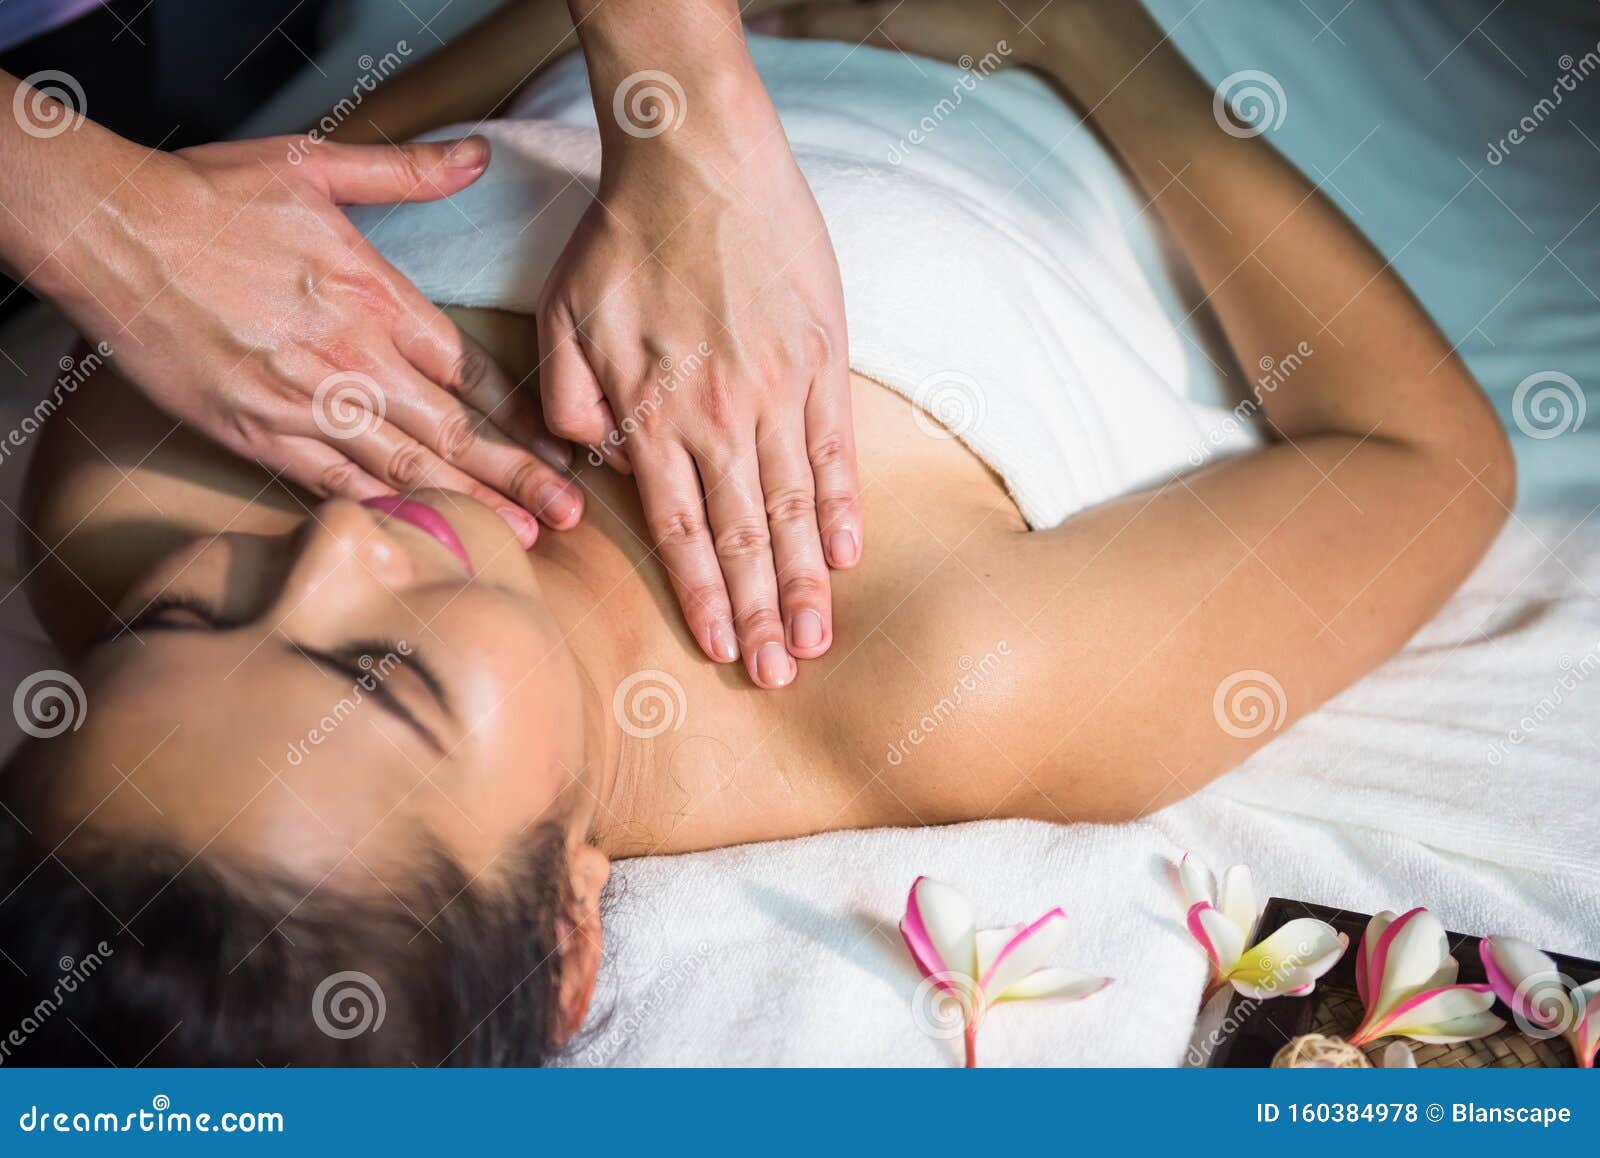 Best Oil Massage Sex